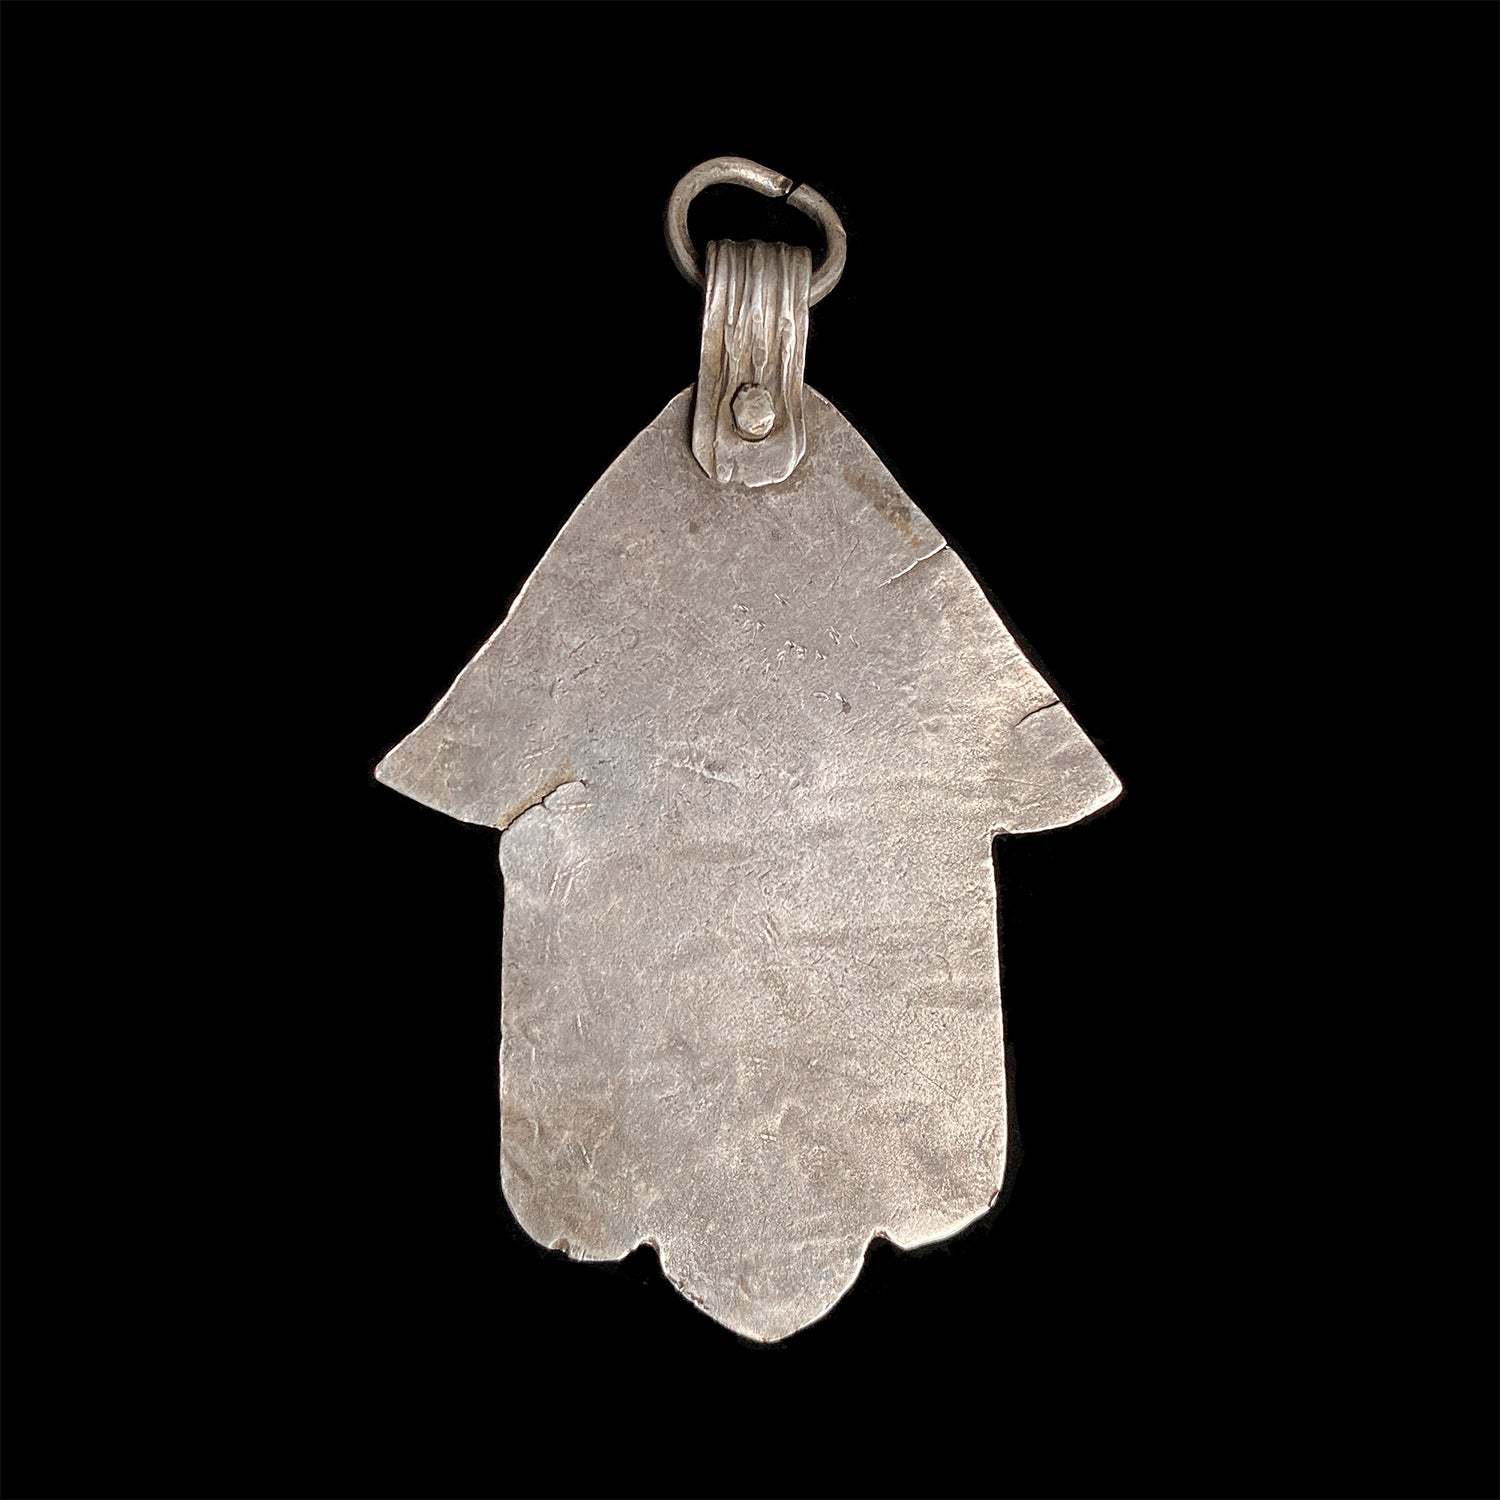 Vintage khamsa pendant from Essaouira, Morocco - medium